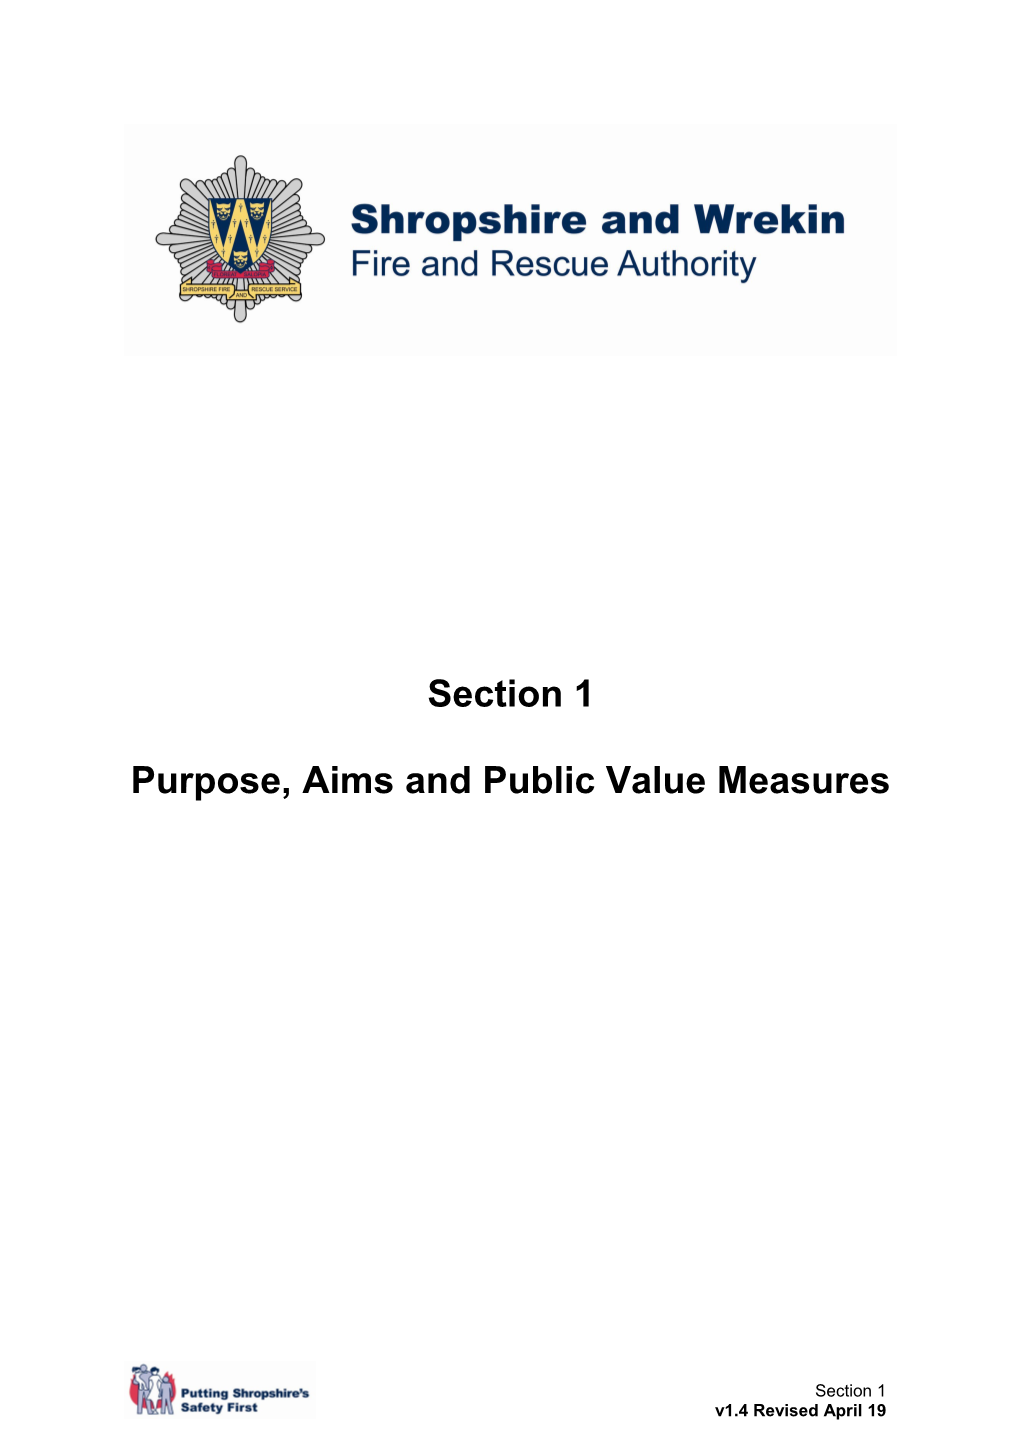 Purpose, Aims and Public Value Measures